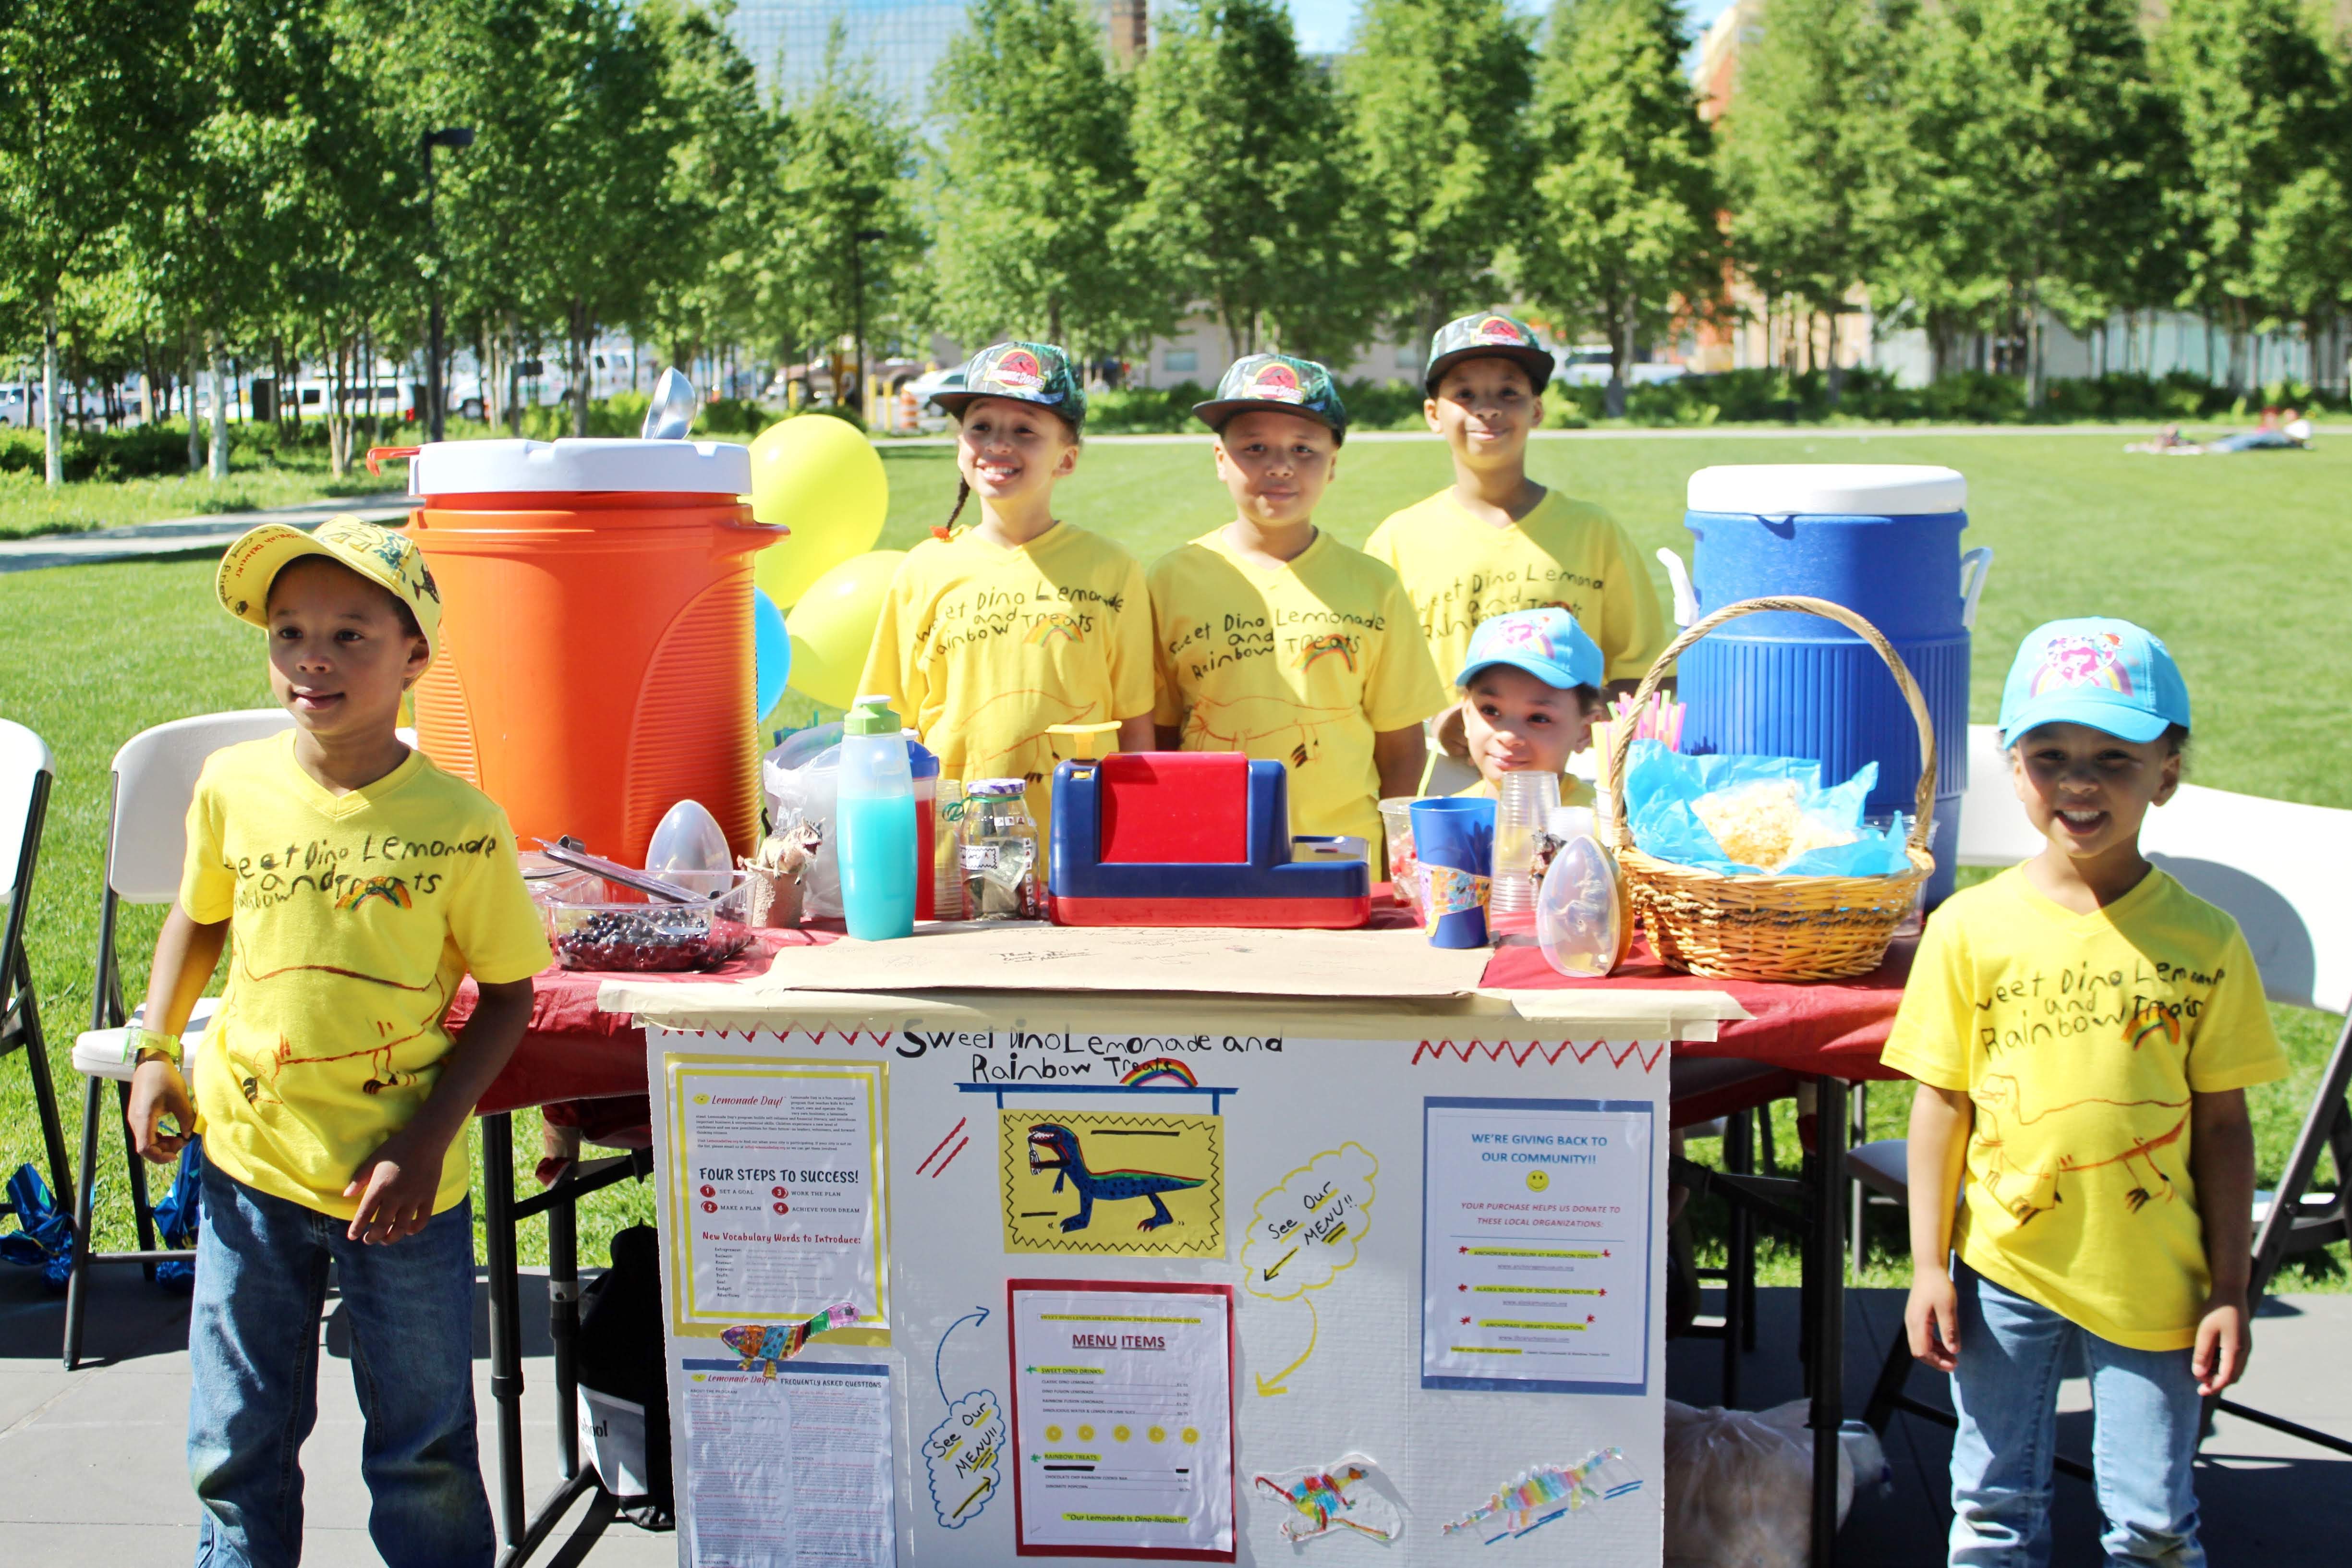 Group of boys with a dinosaur themed lemonade stand